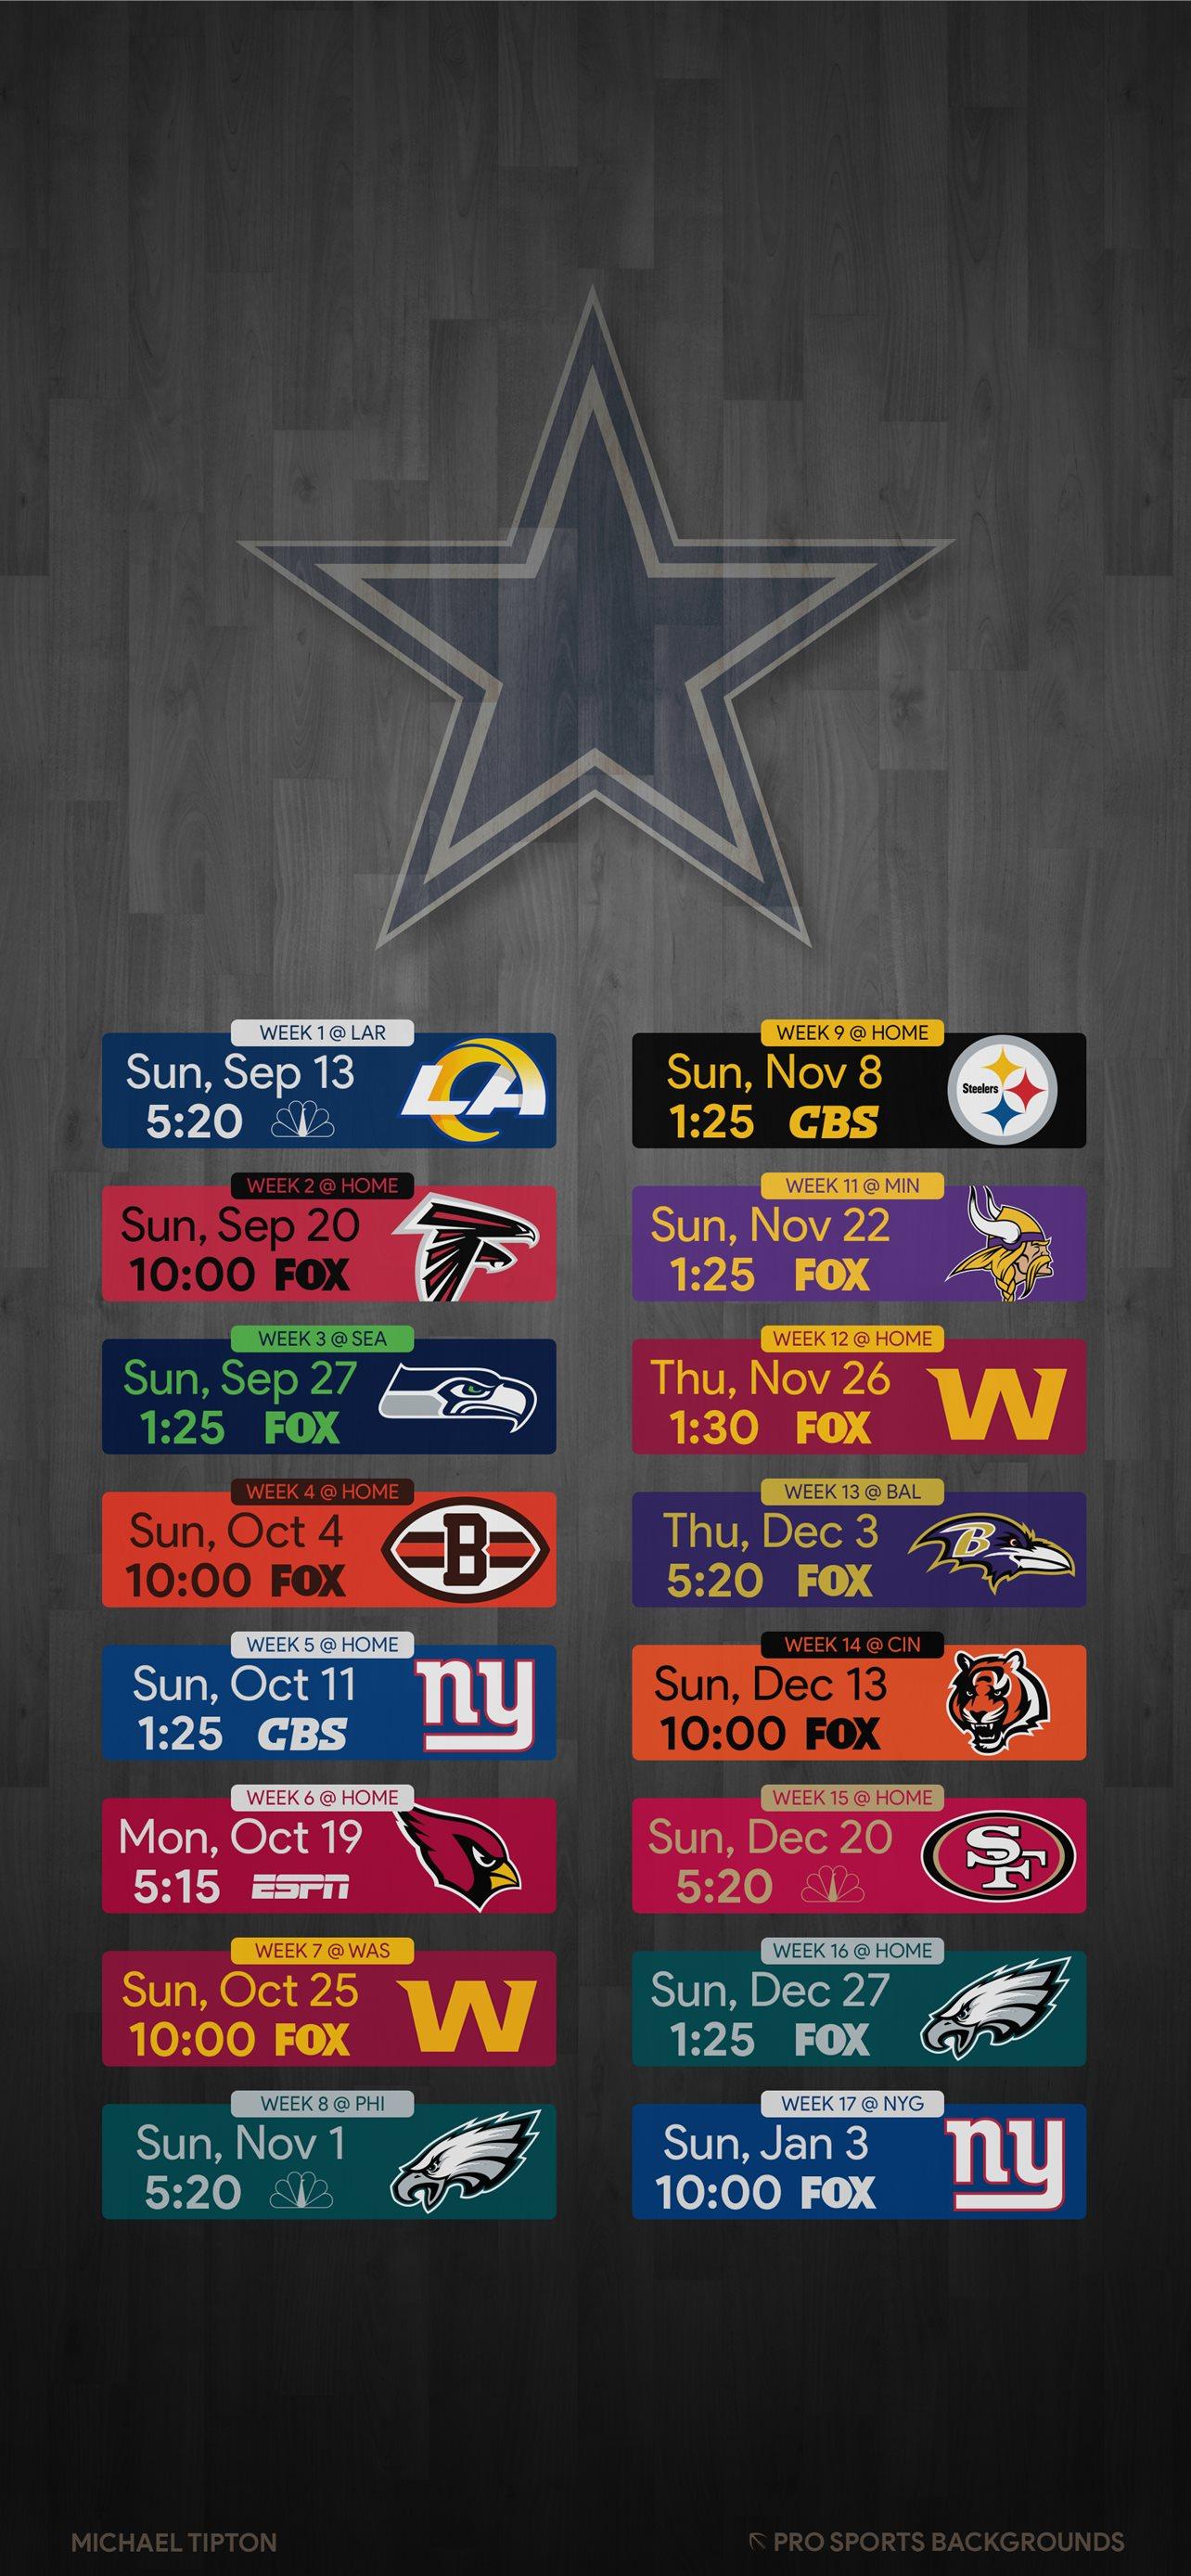 Dallas Cowboys iPhone Wallpaper